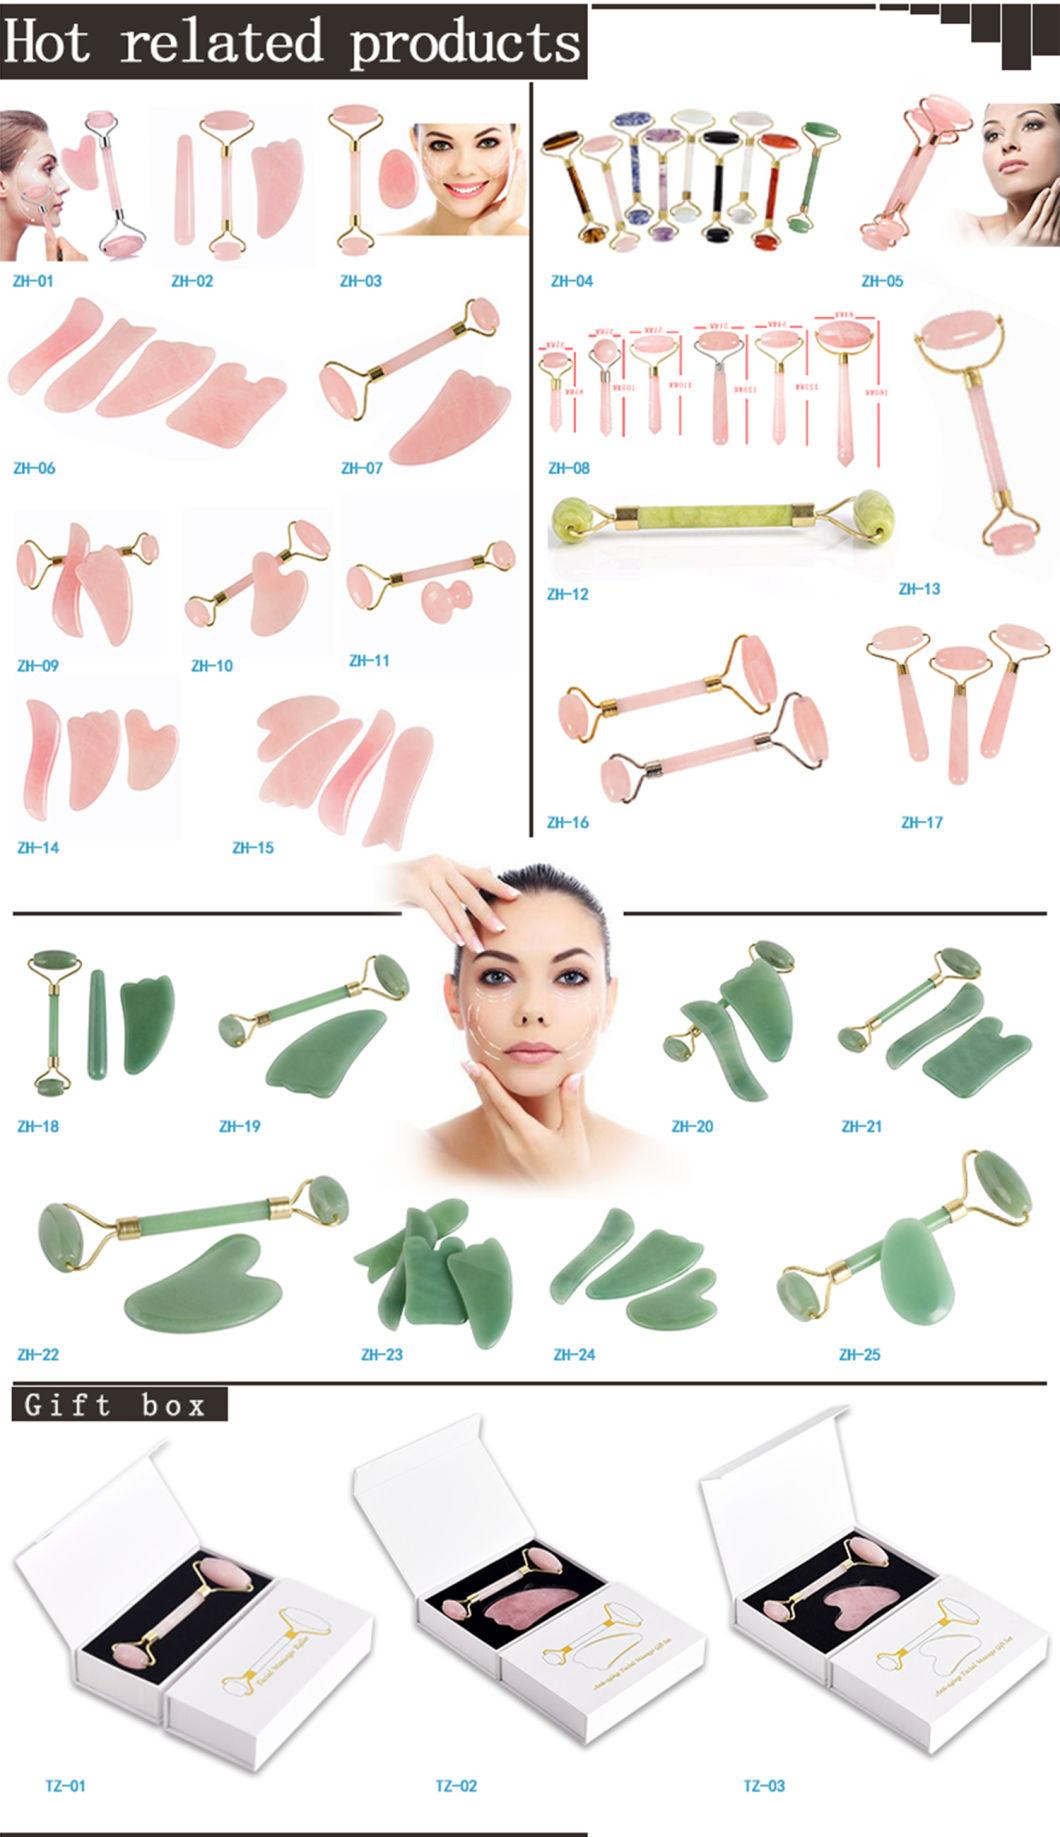 Amazon Hot Selling Rose Quartz Jade Roller Jade Gua Sha Scraping Jade Roller Kit